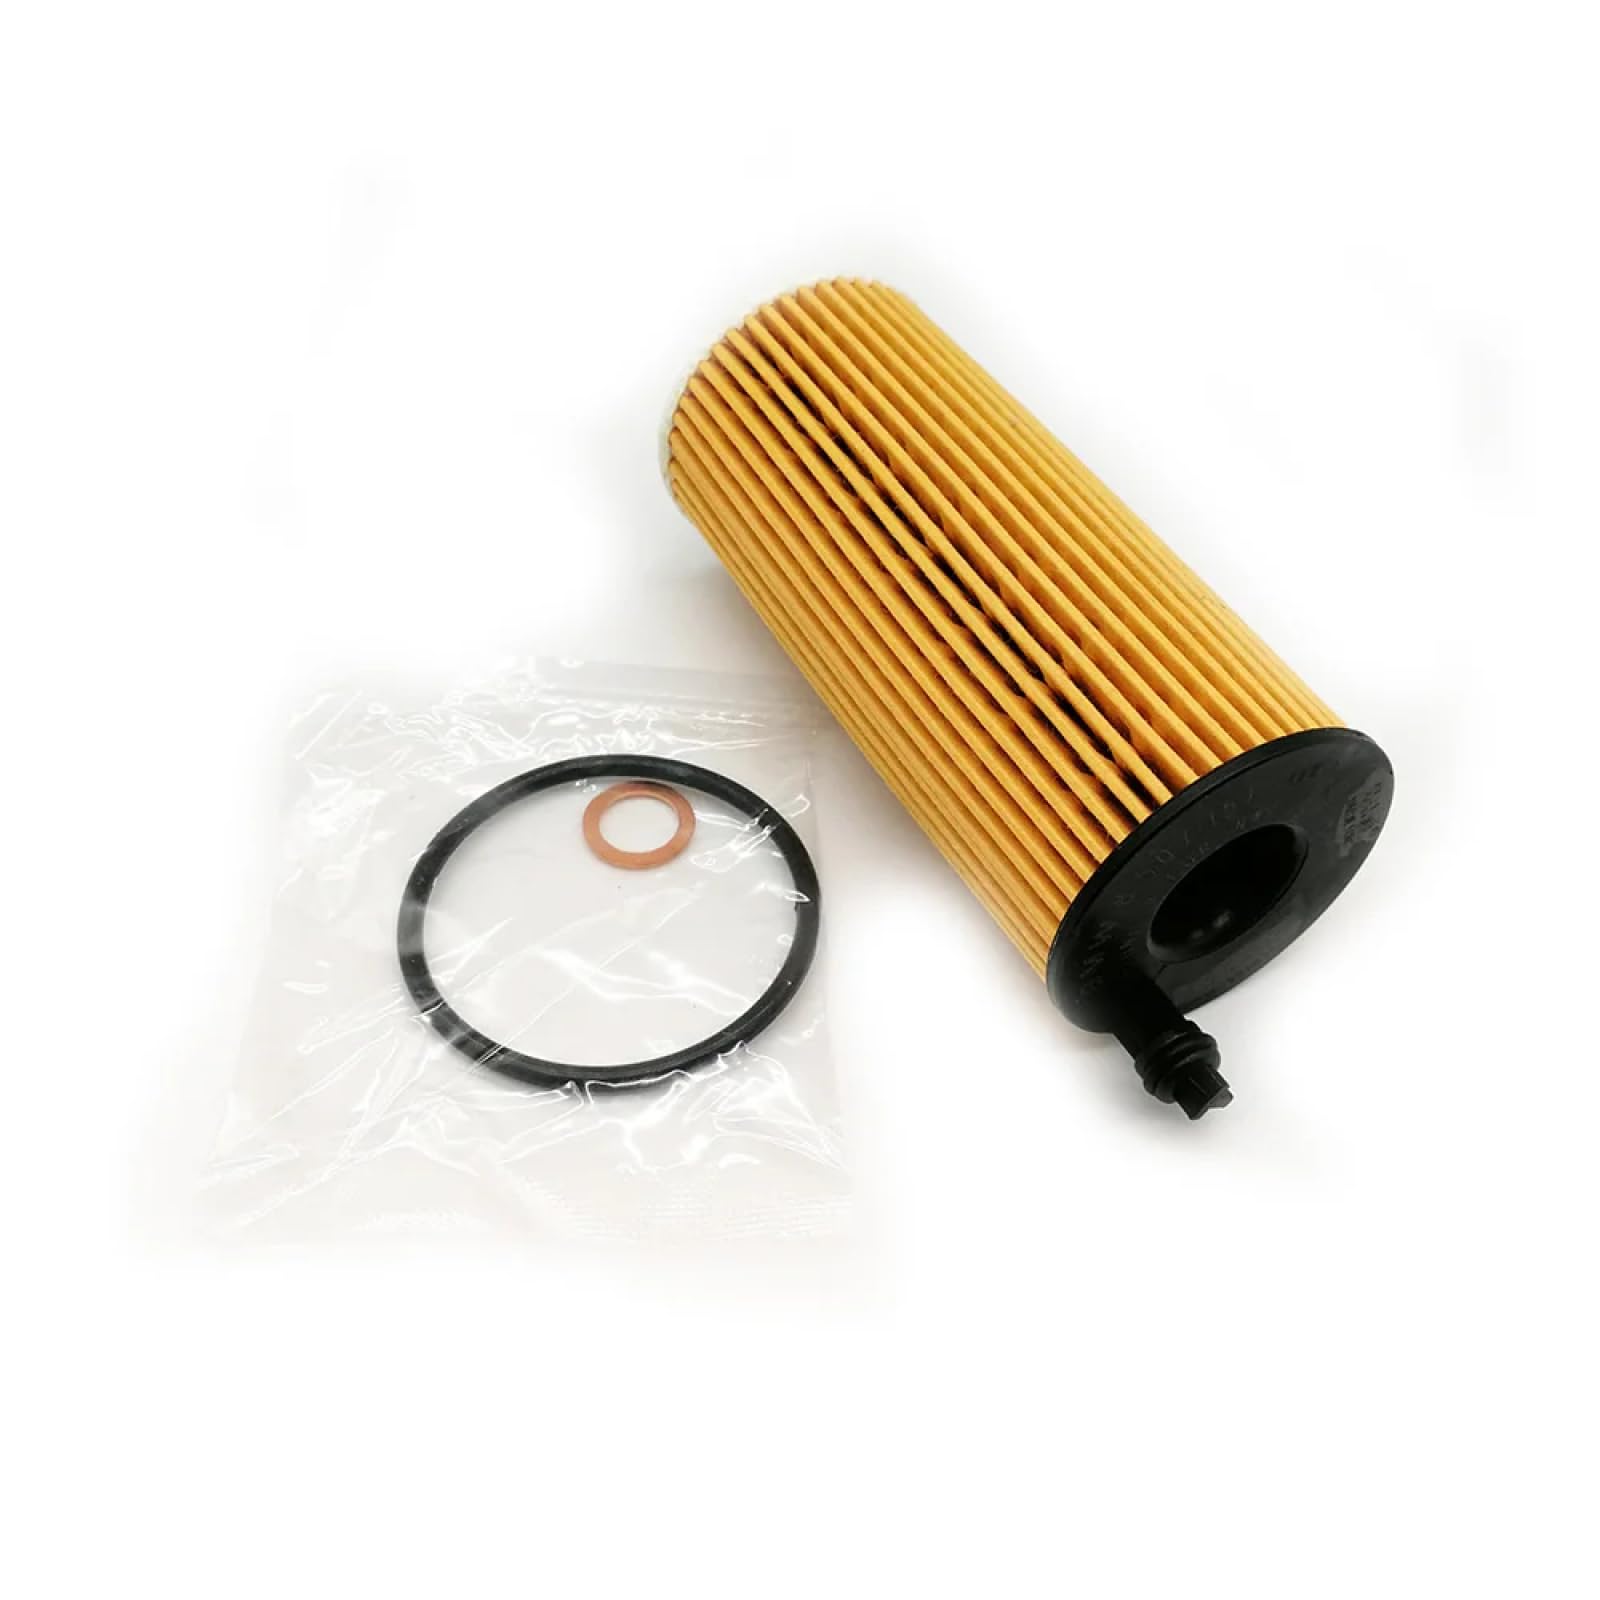 Auto-Ölfilter-Kit ersetzen,11428507683,für BMW MINI E84 E90 E92 F10 F11 F15 F20 F25 F30 120d 320d X1 X3 X5 N47 N57 von PODSI